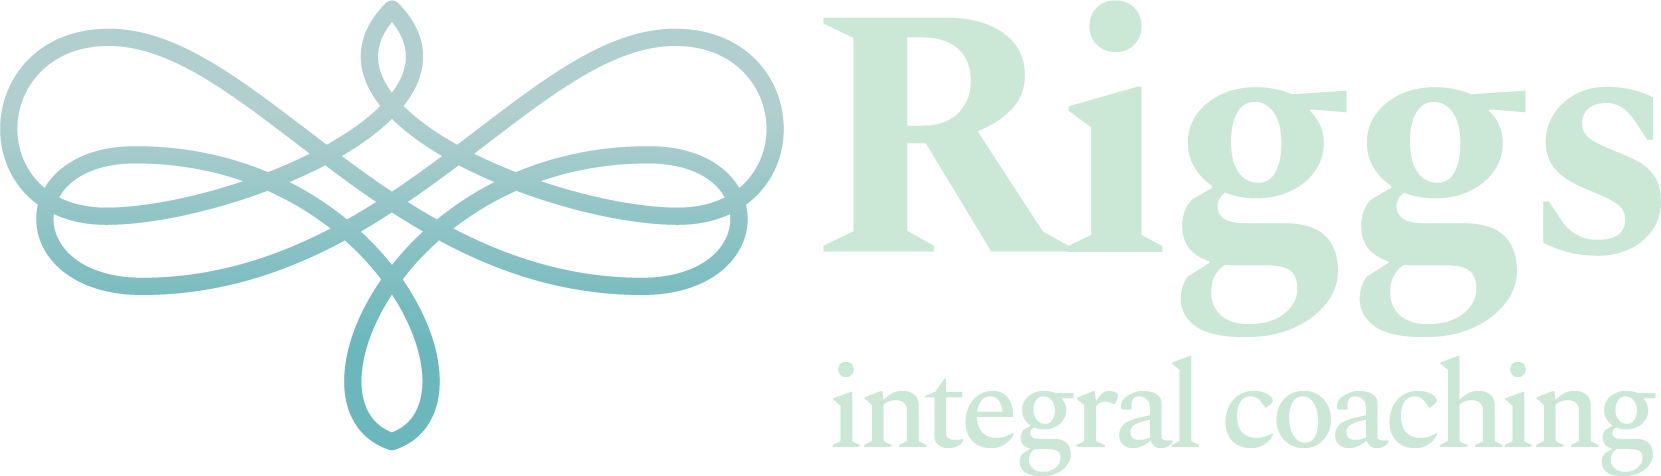 Riggs Integral Coaching website logo